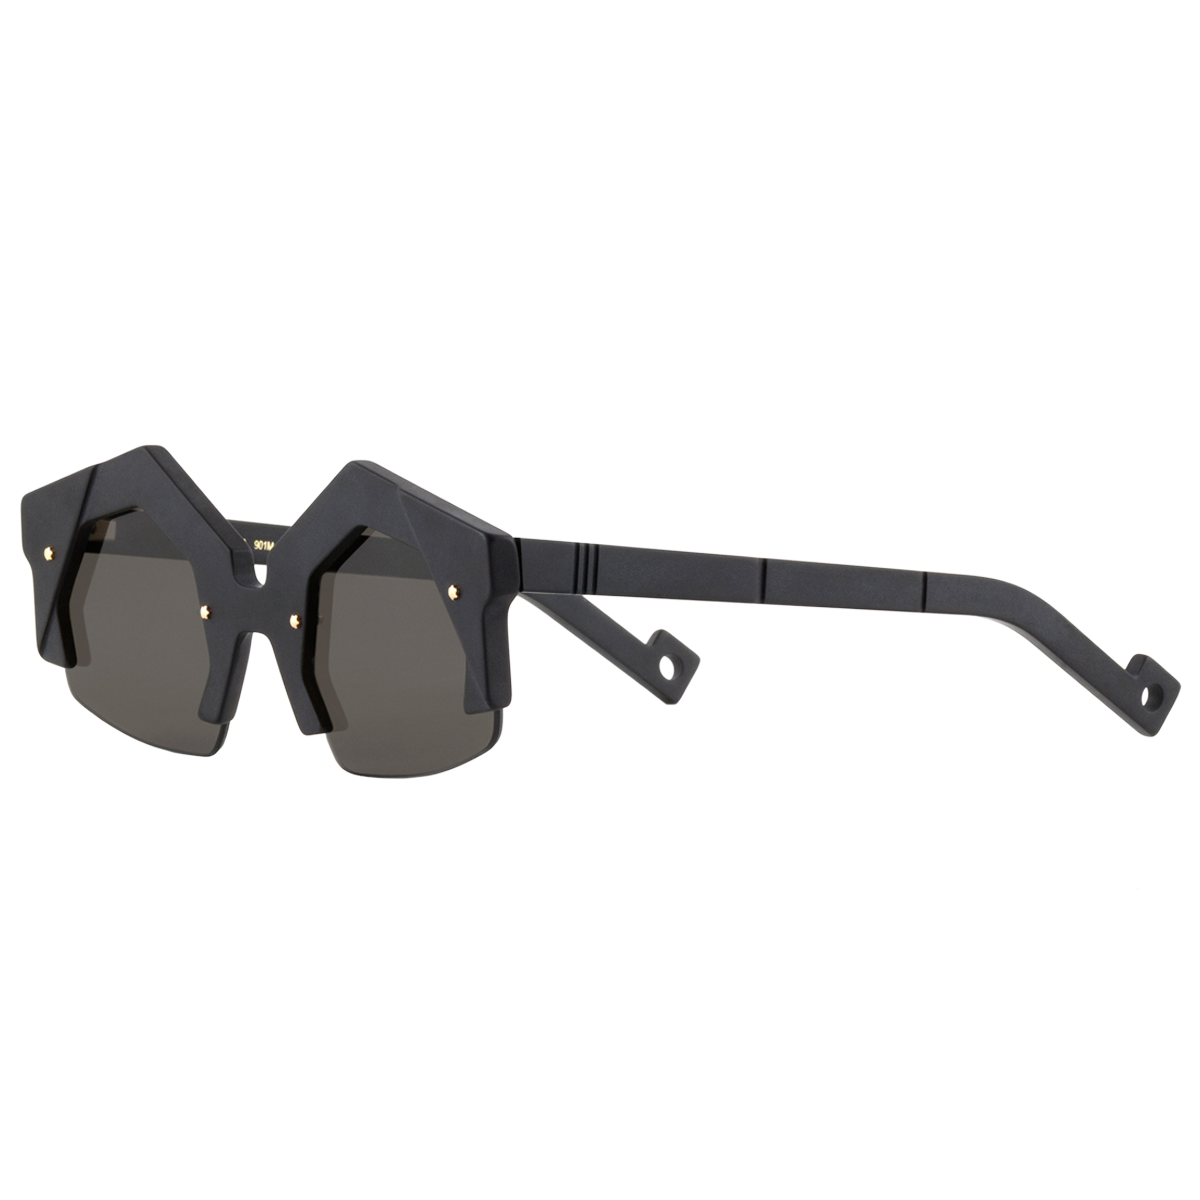 Pawaka DUA 2 Sunglasses Matte Black - new collection 2018